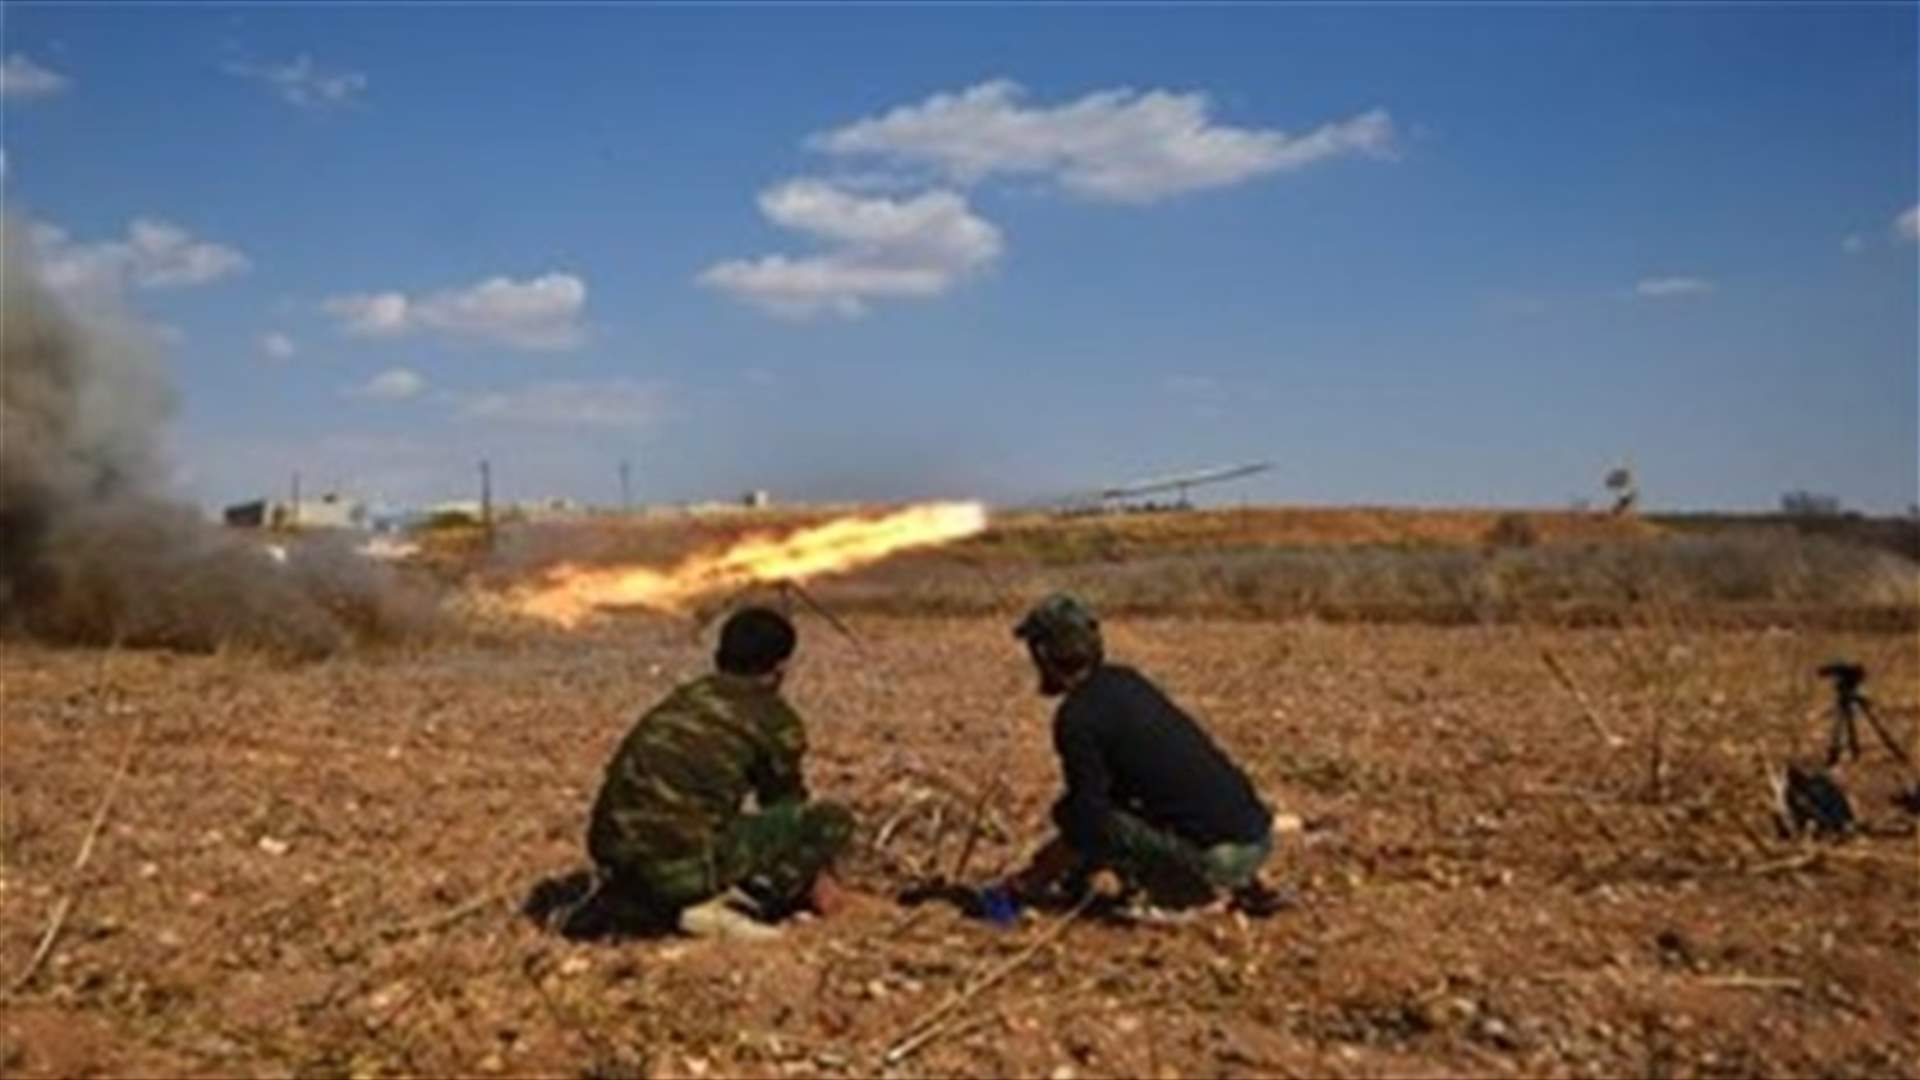 Syrian army strikes rebels near Hama -monitor